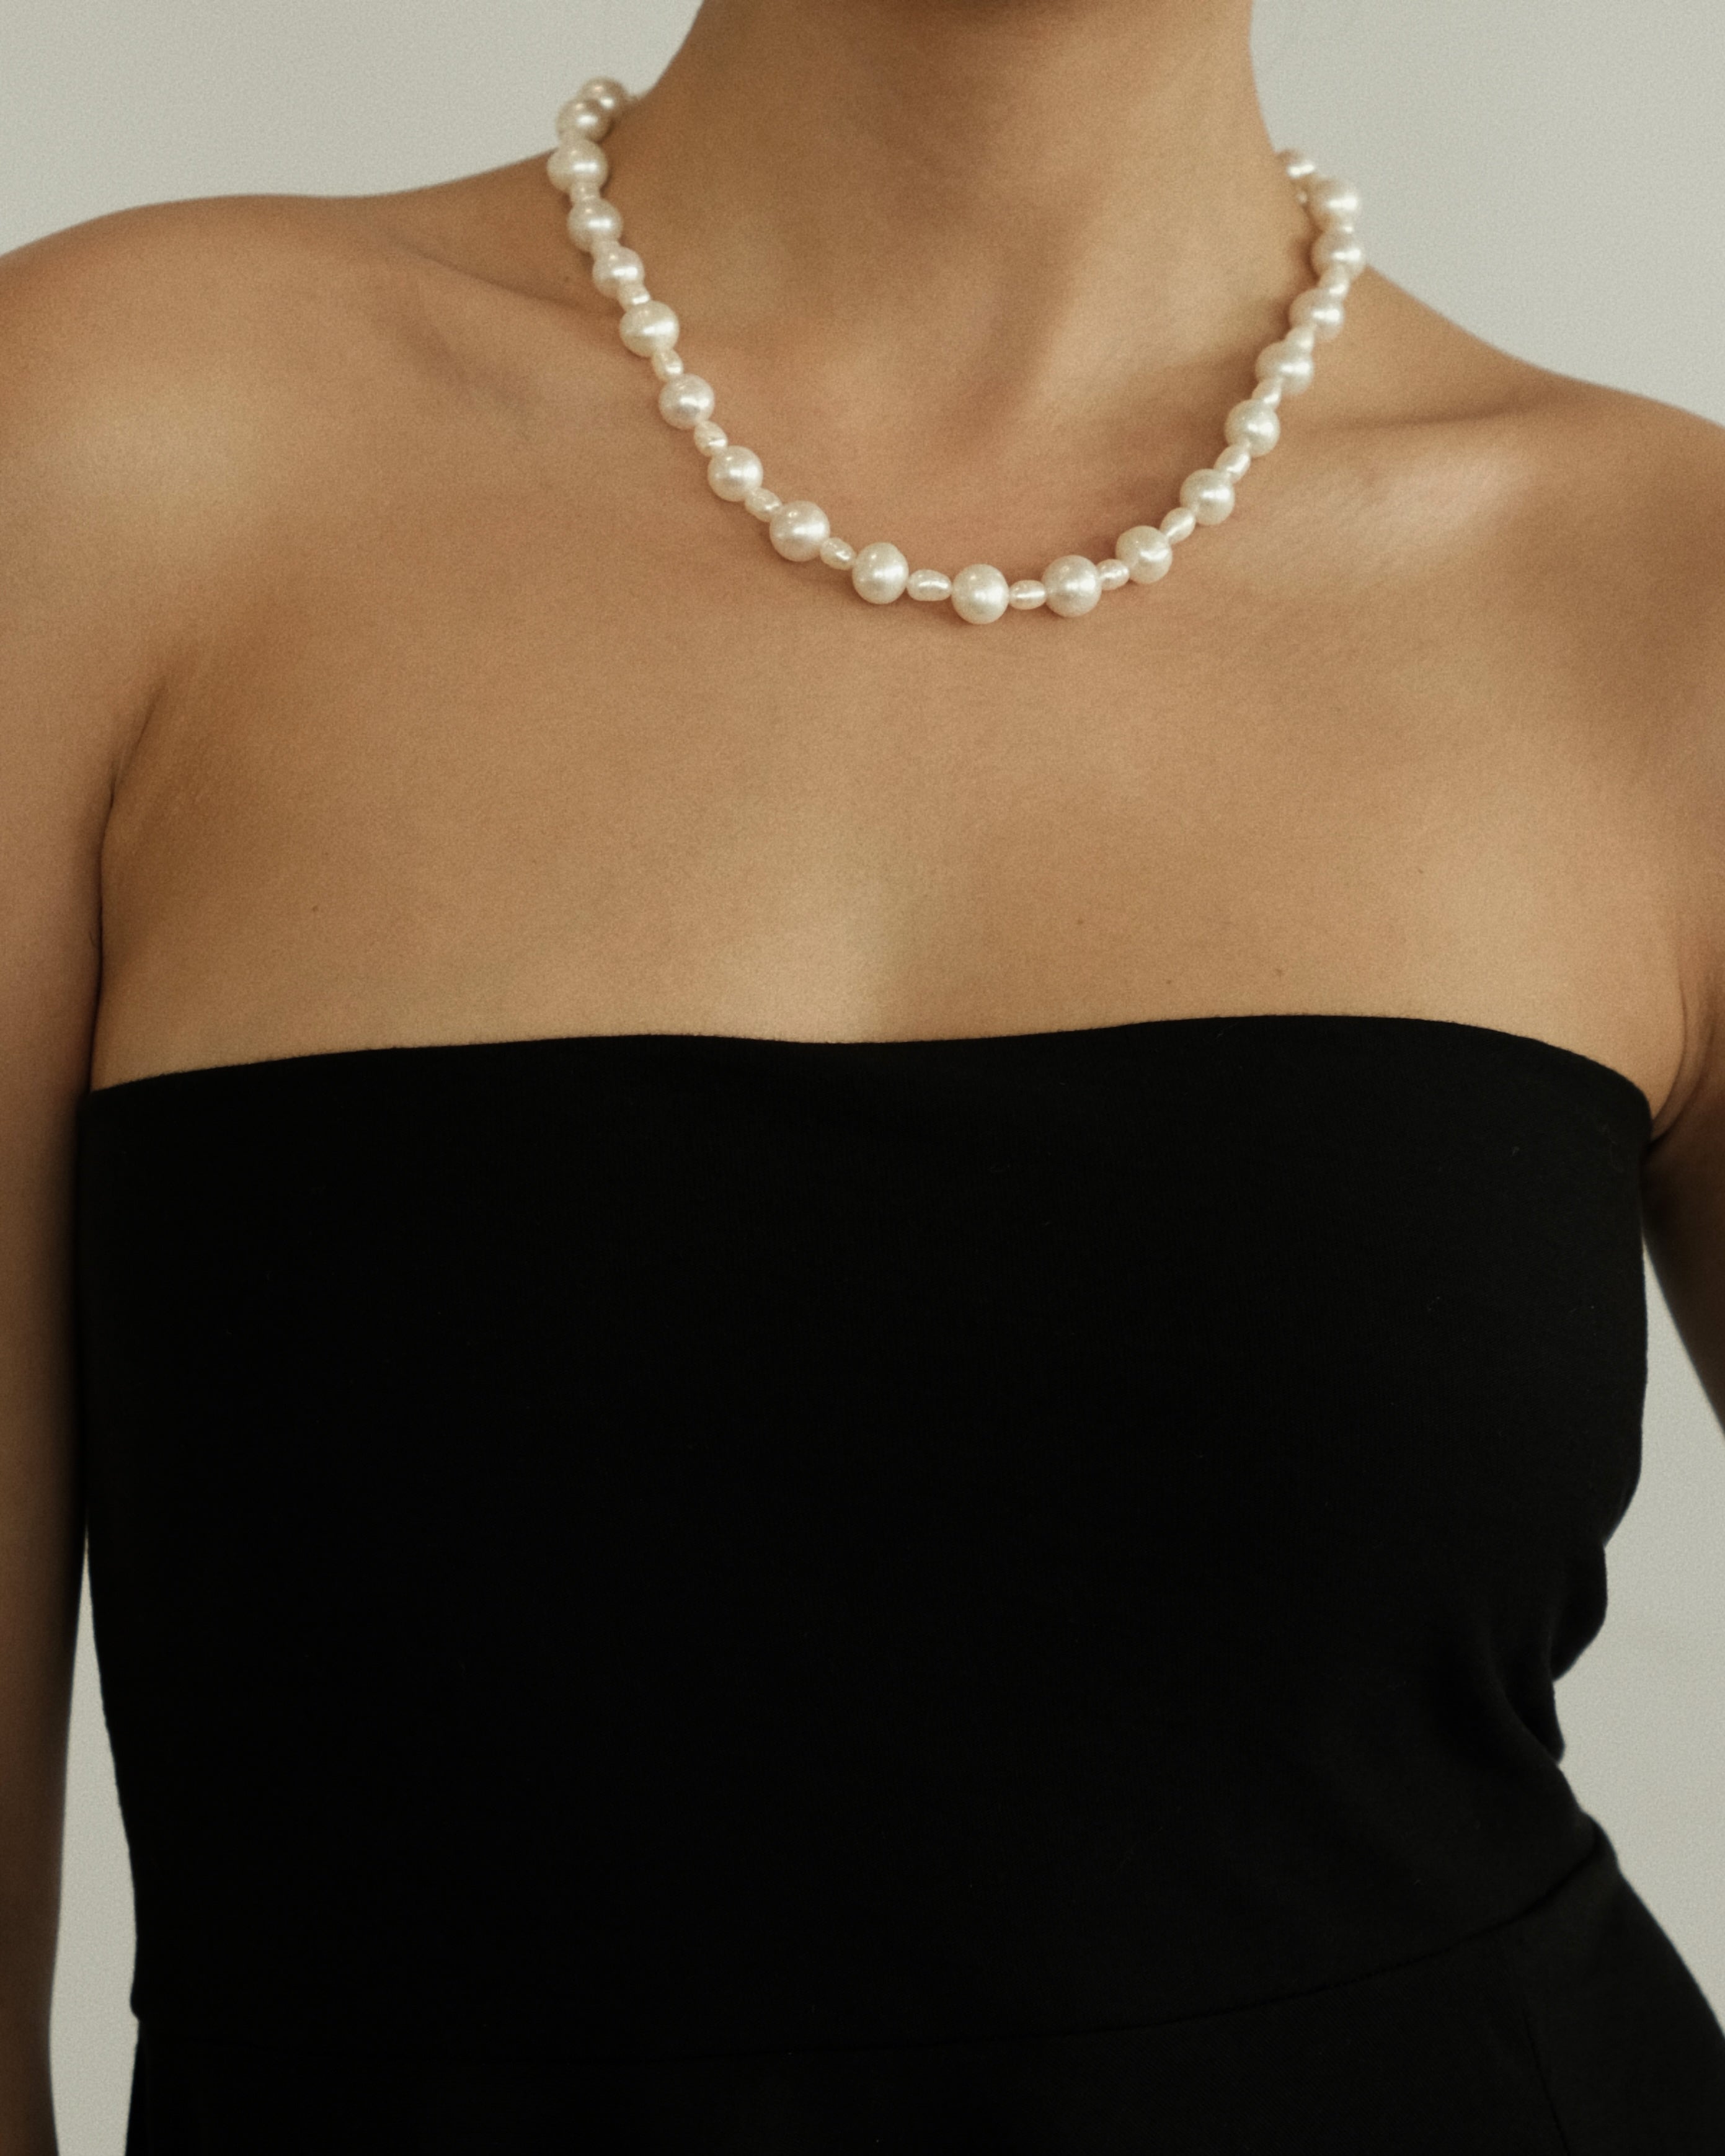 The Madame Pearl Collar